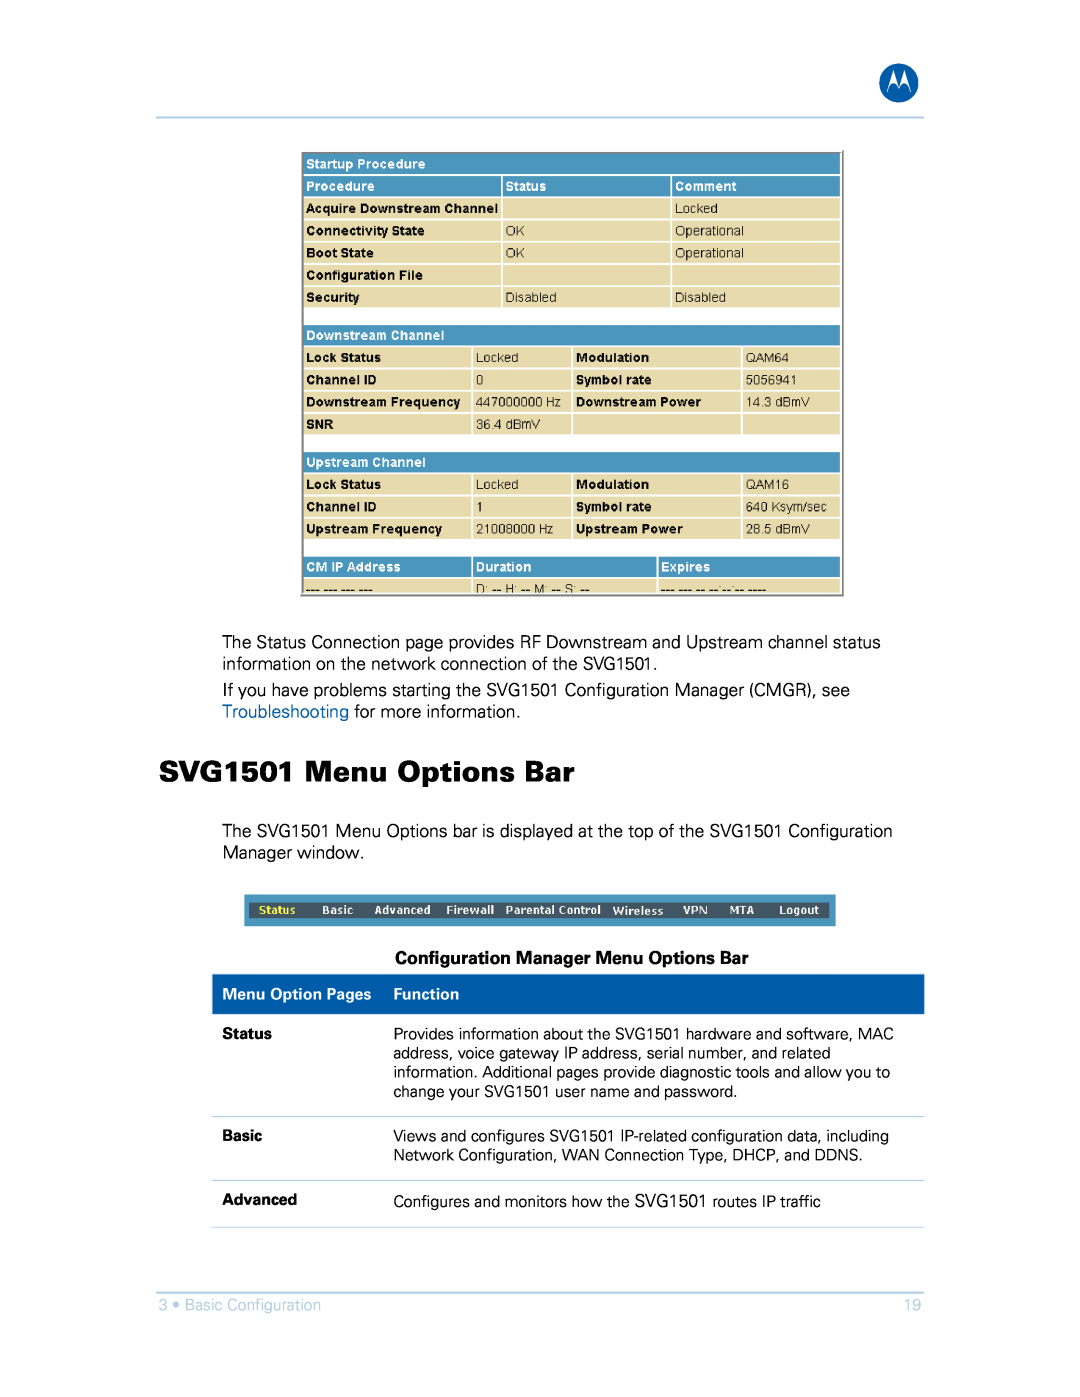 Motorola SVG1501E, SVG1501UE manual SVG1501 Menu Options Bar, Configuration Manager Menu Options Bar 